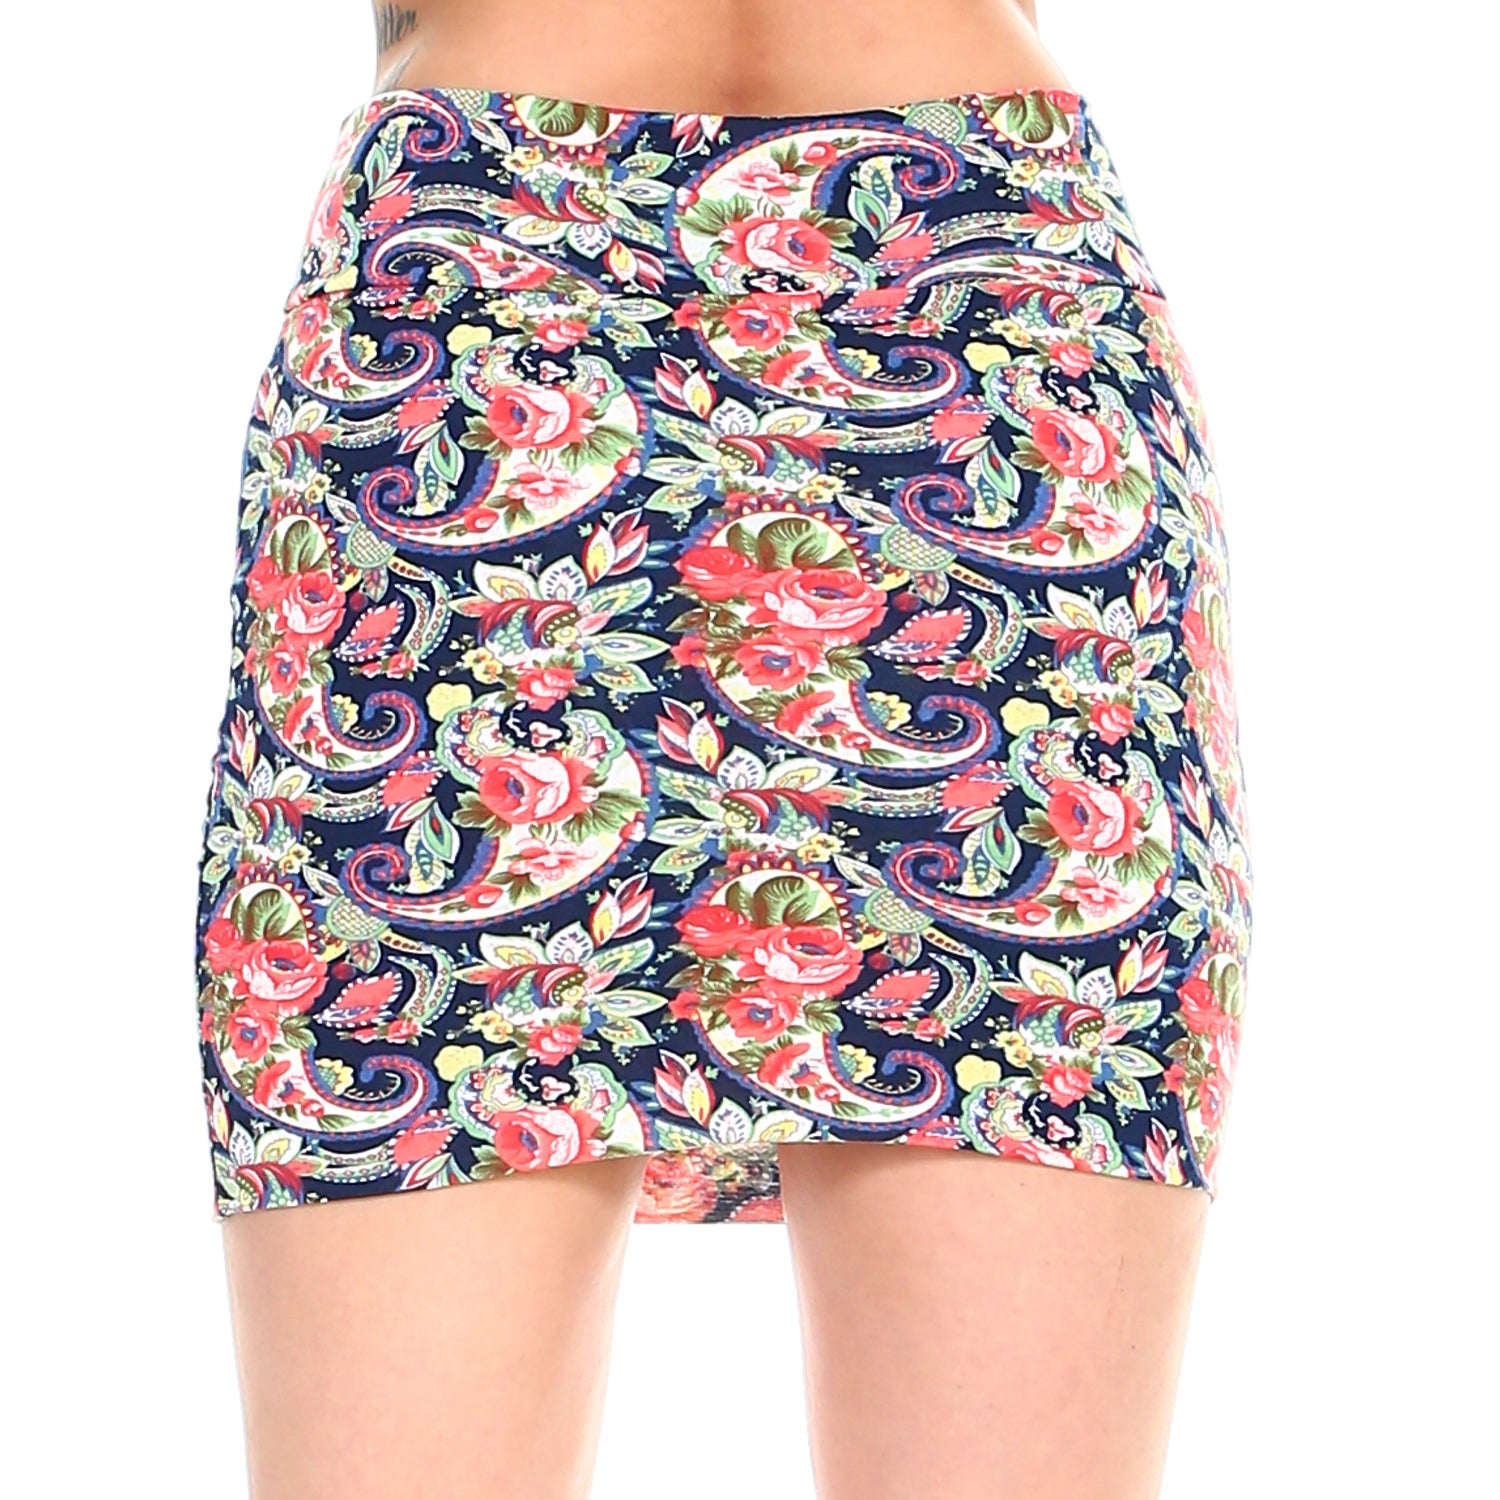 Fashionazzle Women's Casual Stretchy Bodycon Pencil Mini Skirt Print#55